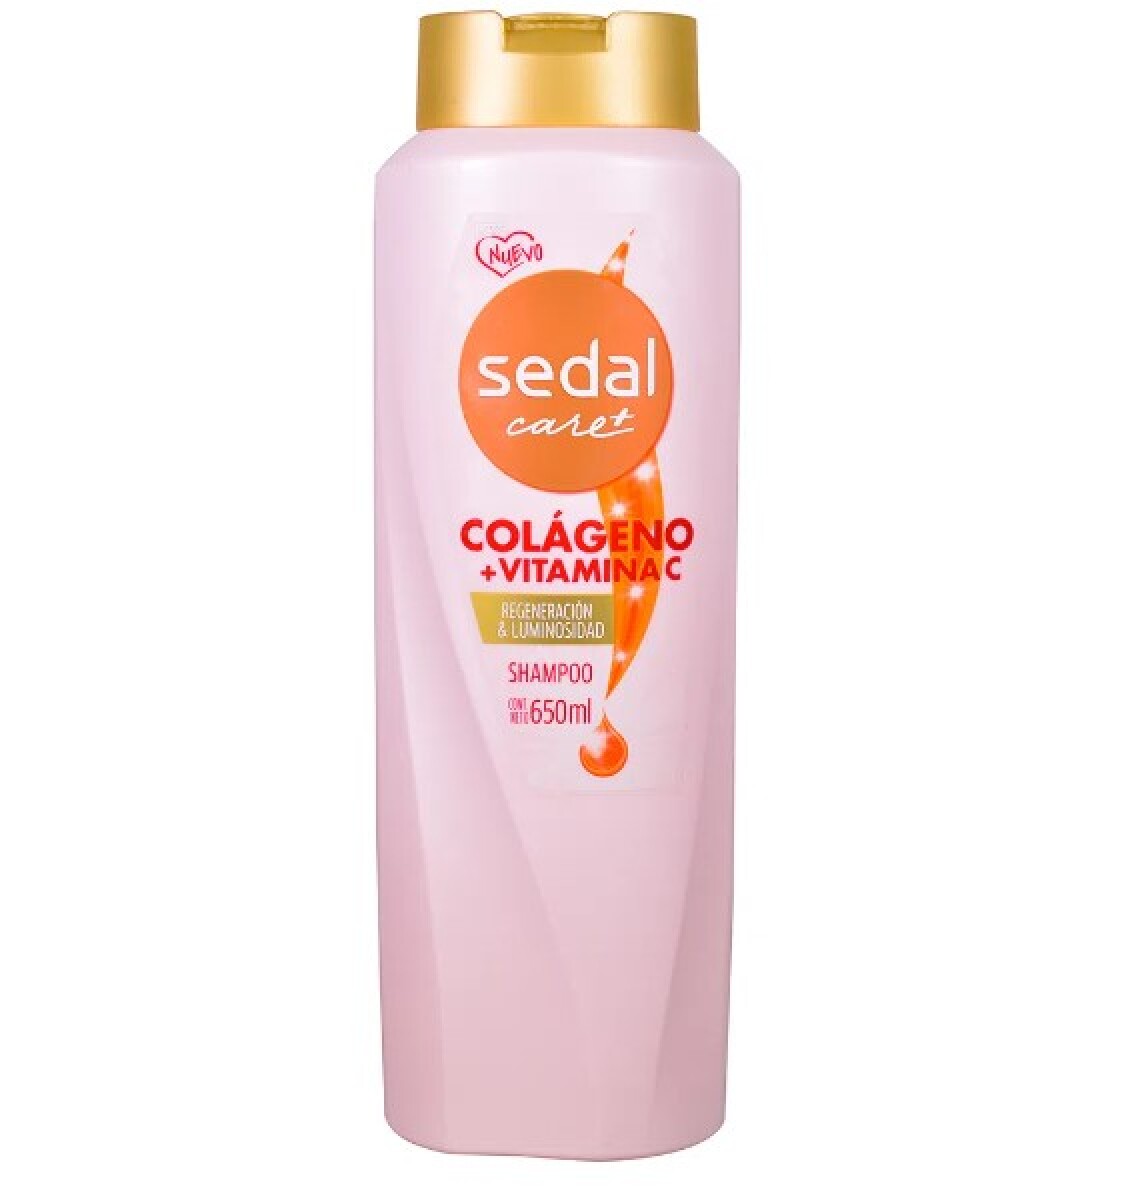 Sedal shampoo 650 ml - Colágeno + Vitamina C 